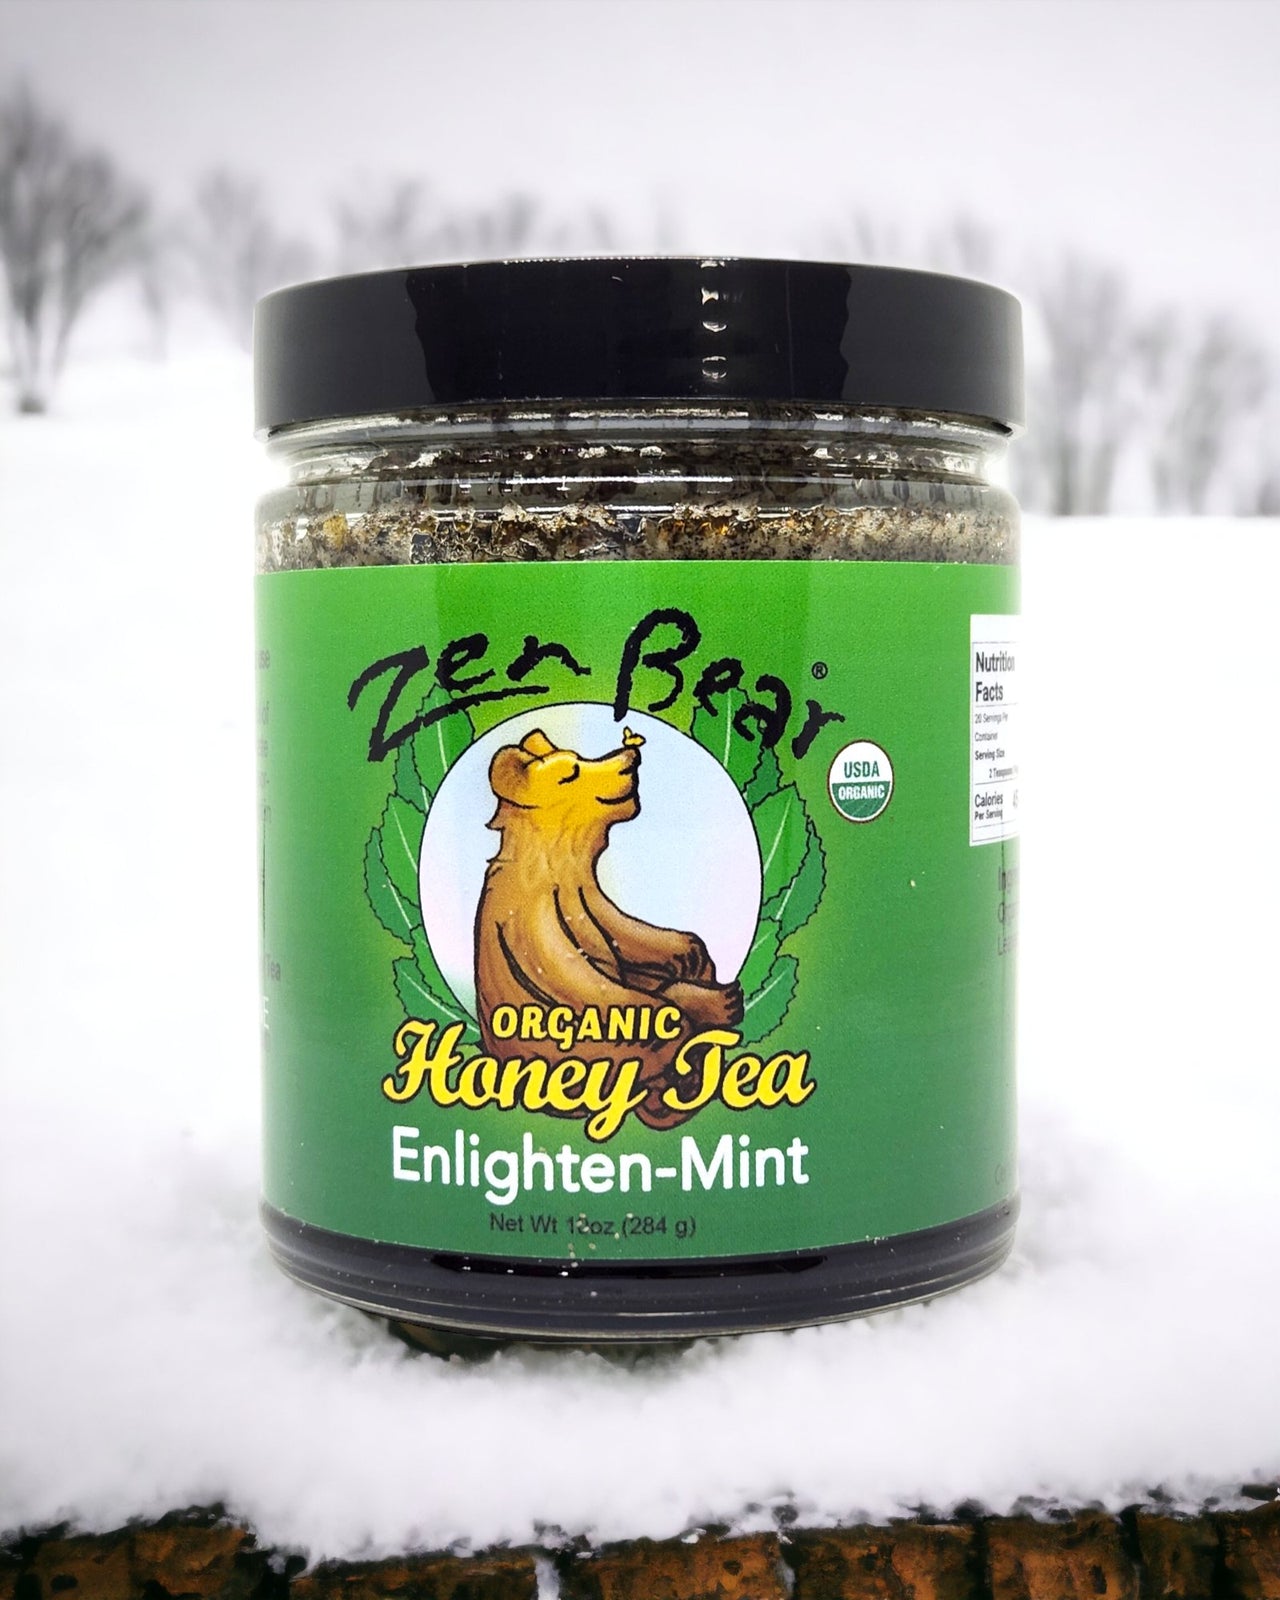 Organic Enlighten-Mint Honey Tea - Zenbear Honey Tea